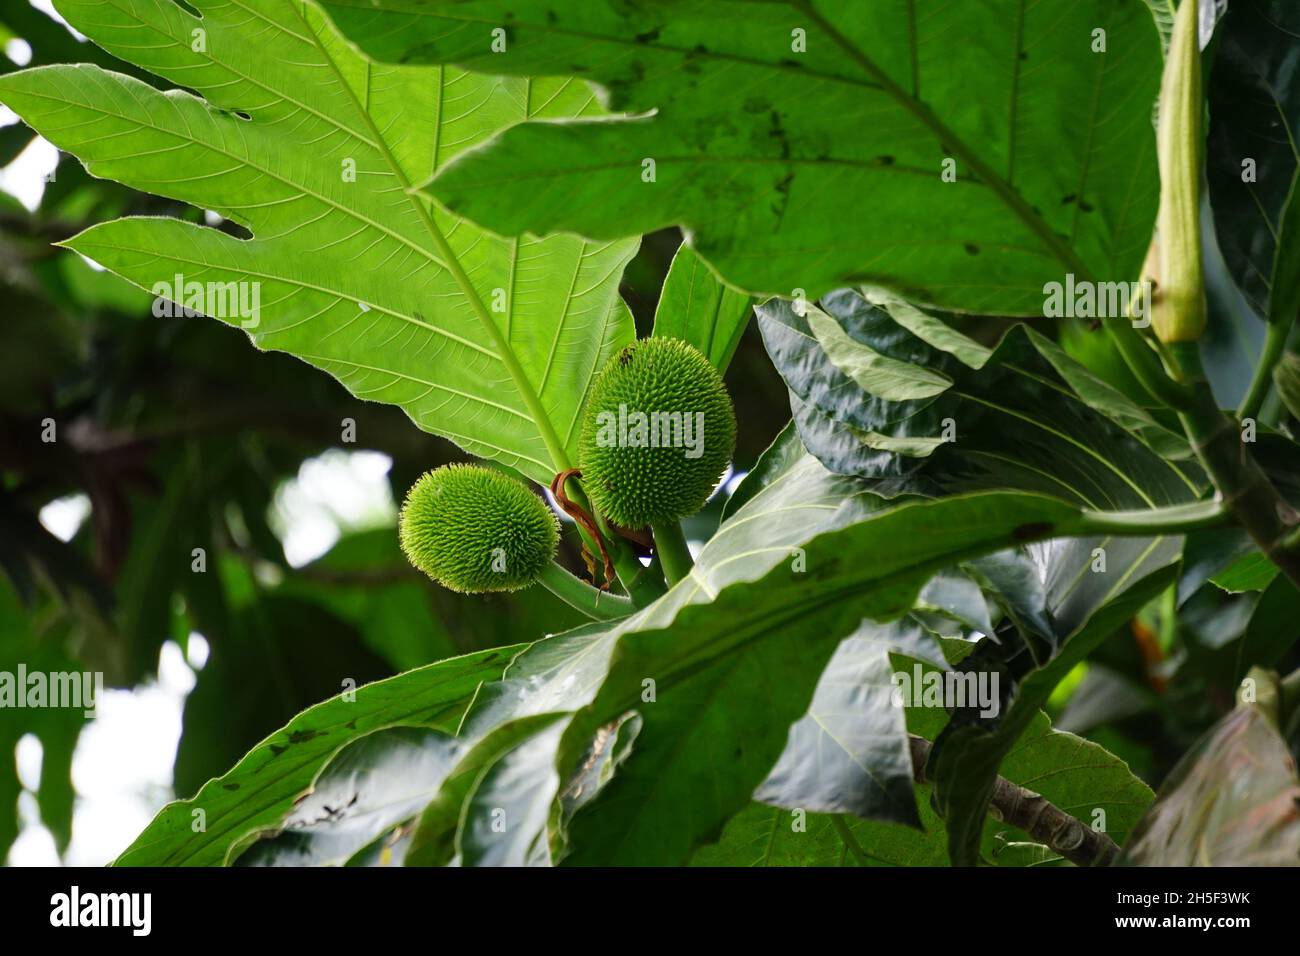 Artocarpus camansi (Also breadnut, Moraceae, breadfruit, Artocarpus altilis, seeded breadfruit, Breadnut fruits, Kluwih) on the tree Stock Photo